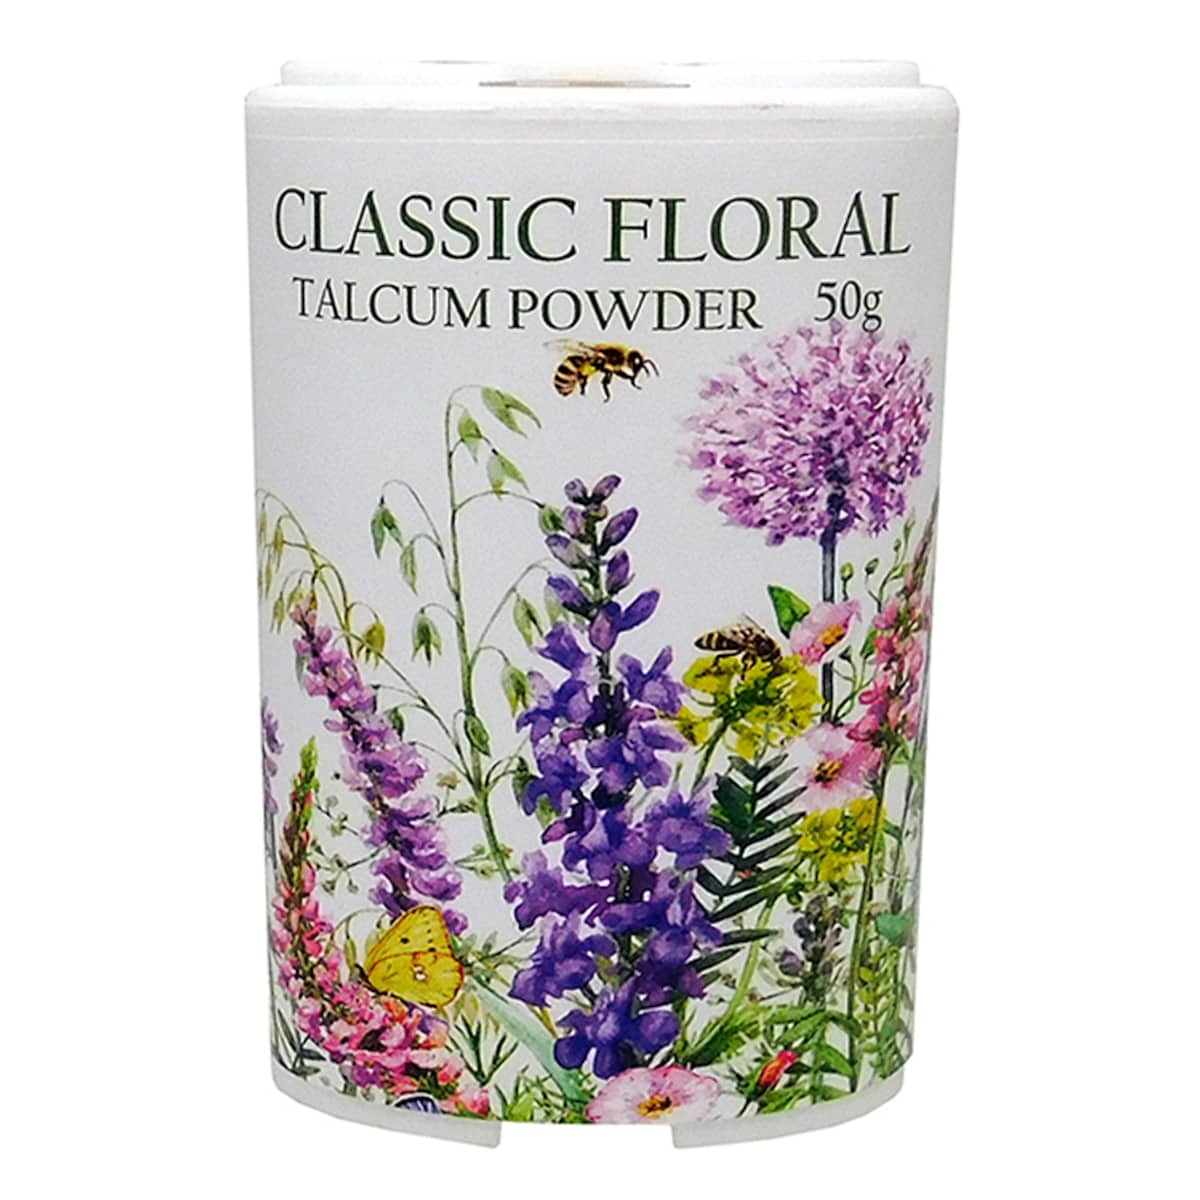 Classic Floral Talcum Powder 50g